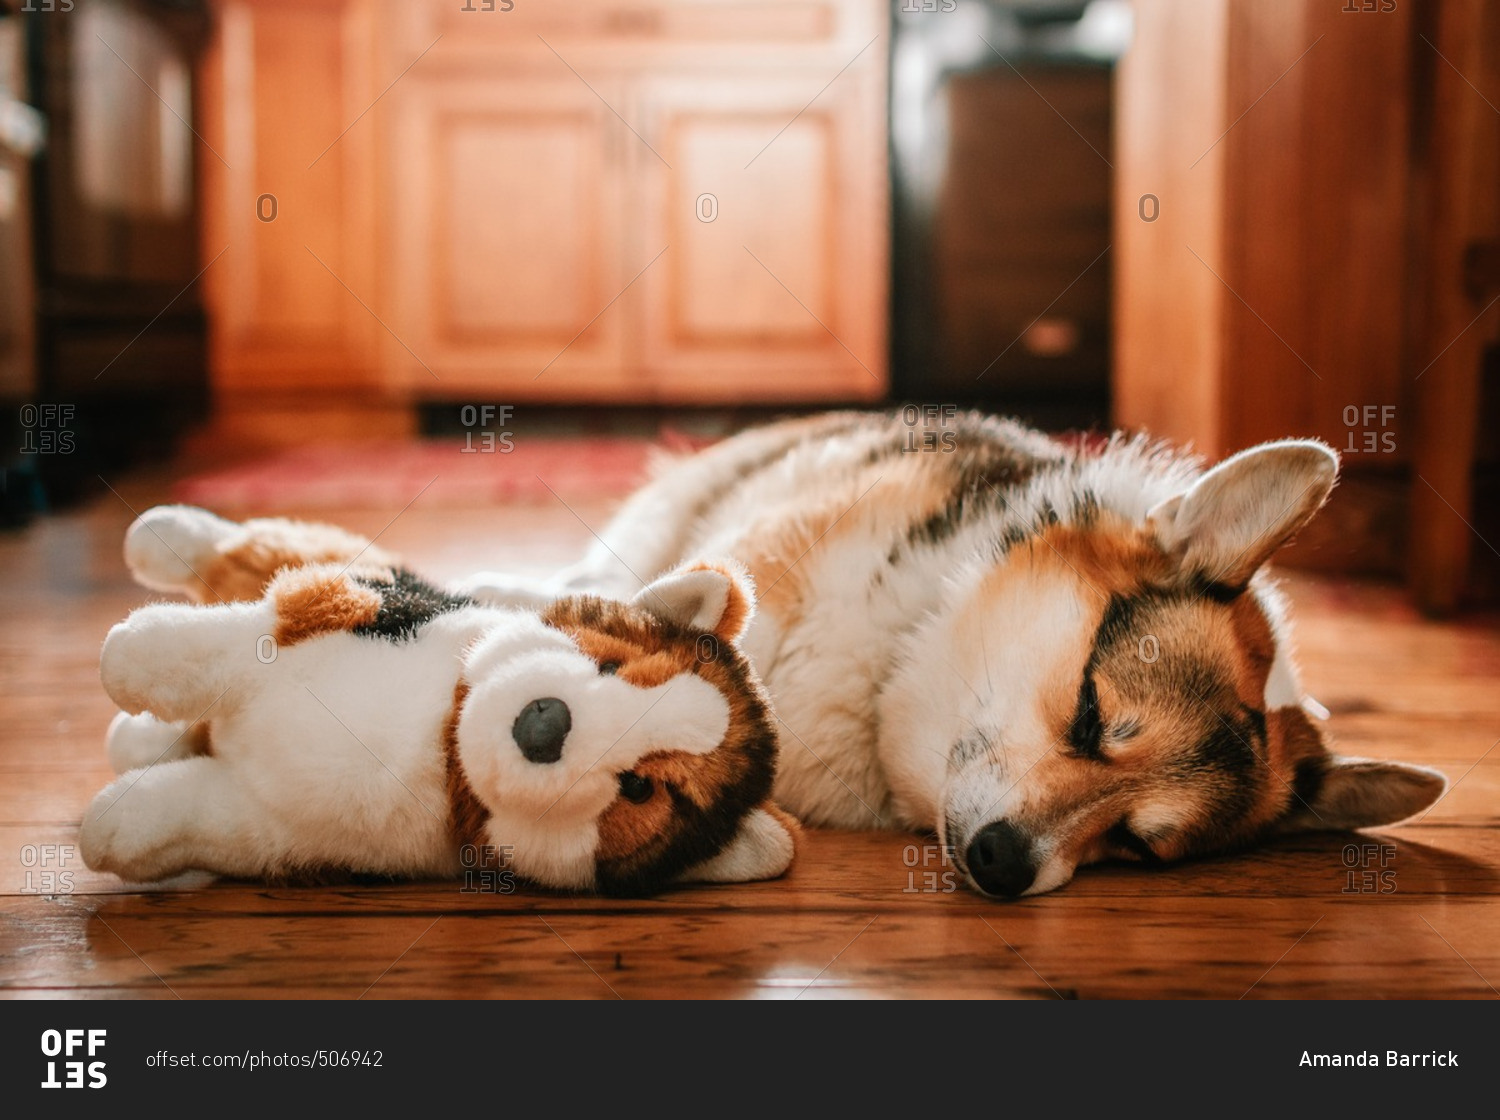 Corgi dog napping next to a stuffed dog on a floor